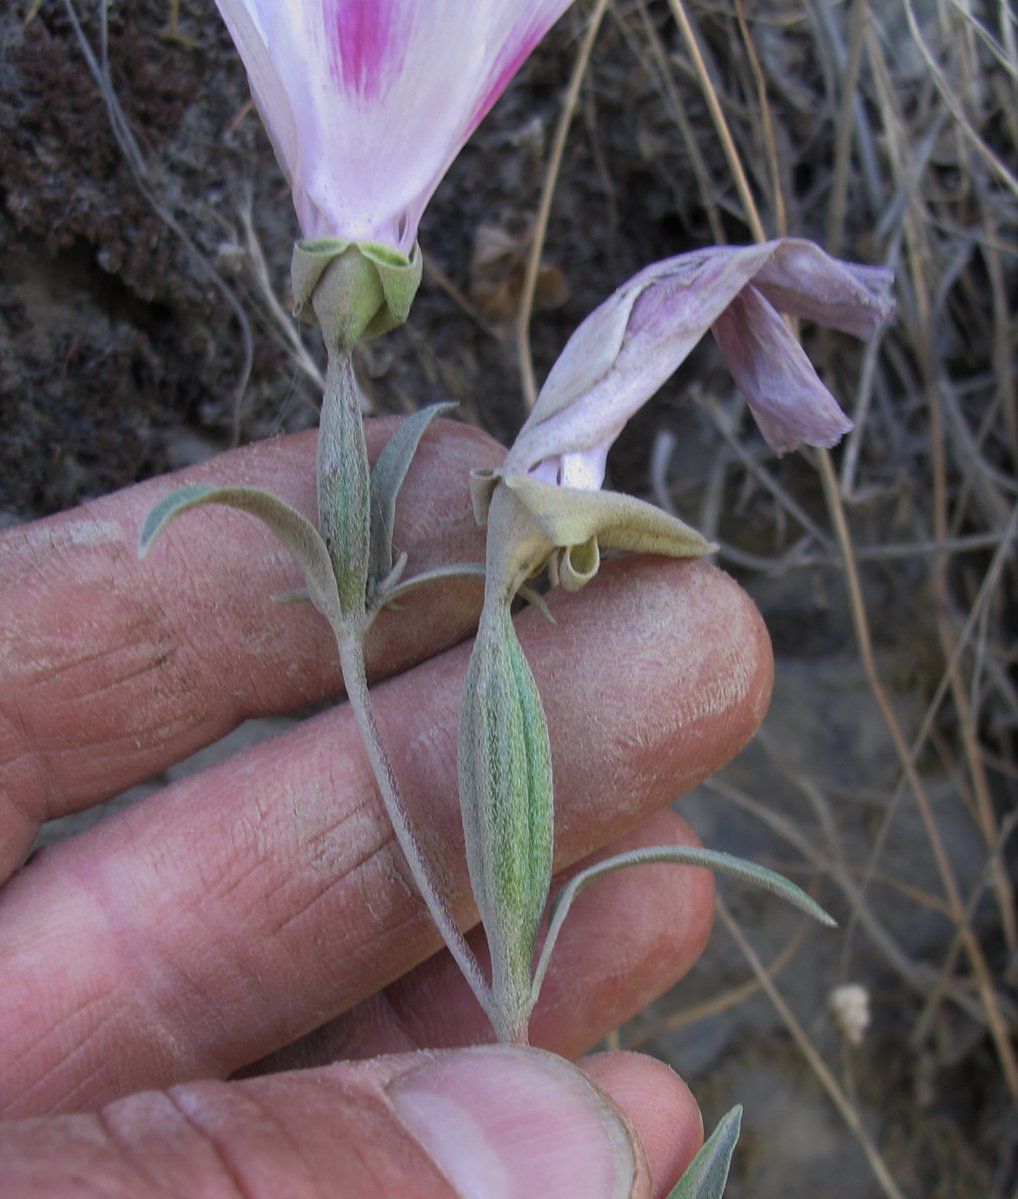 Clarkia amoena ssp. whitneyi